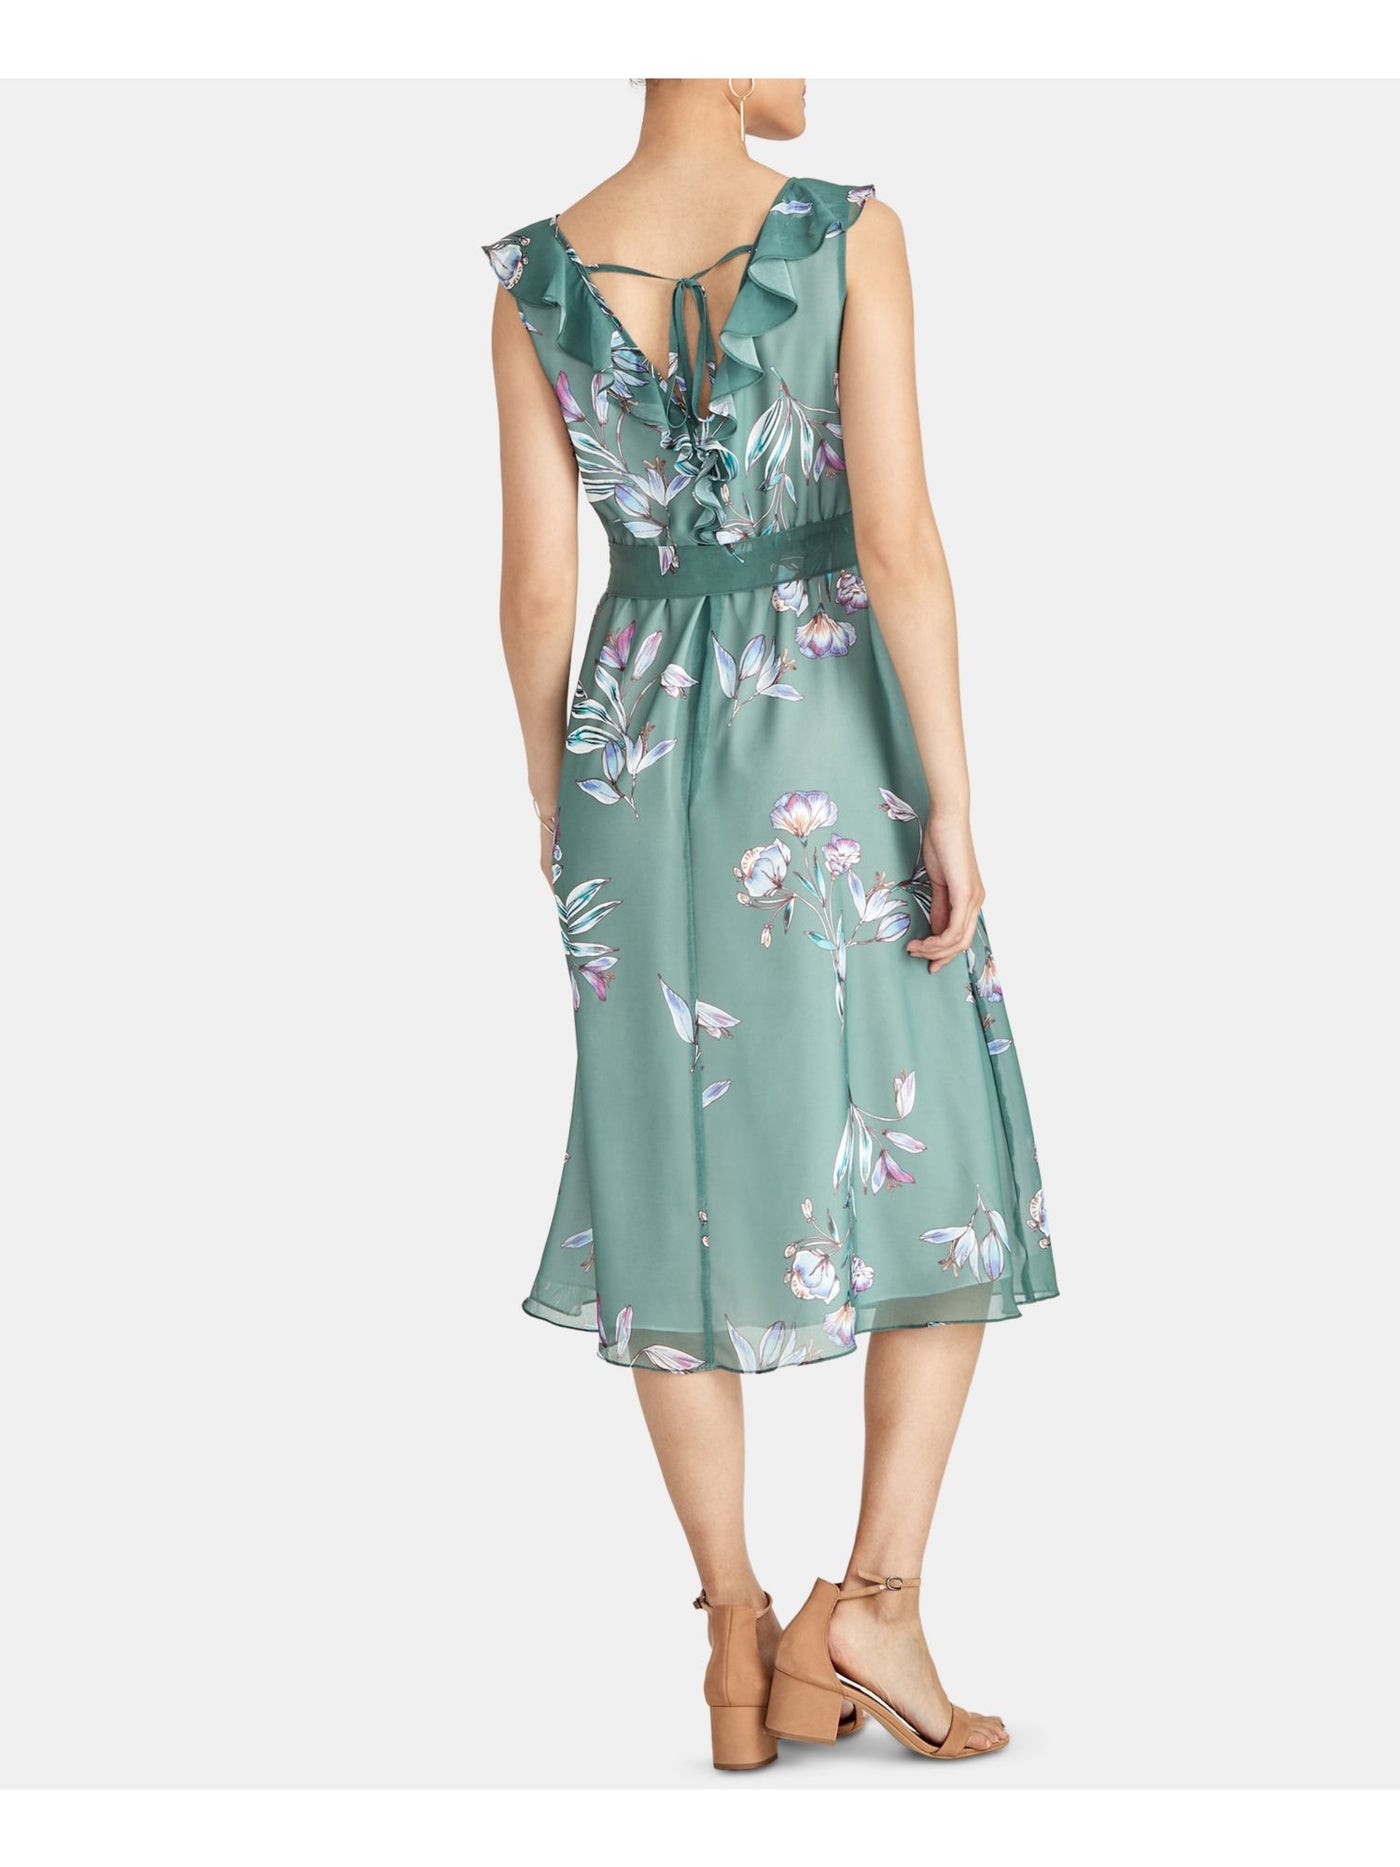 RACHEL ROY Womens Green Ruffled Floral Sleeveless V Neck Midi Sheath Dress S